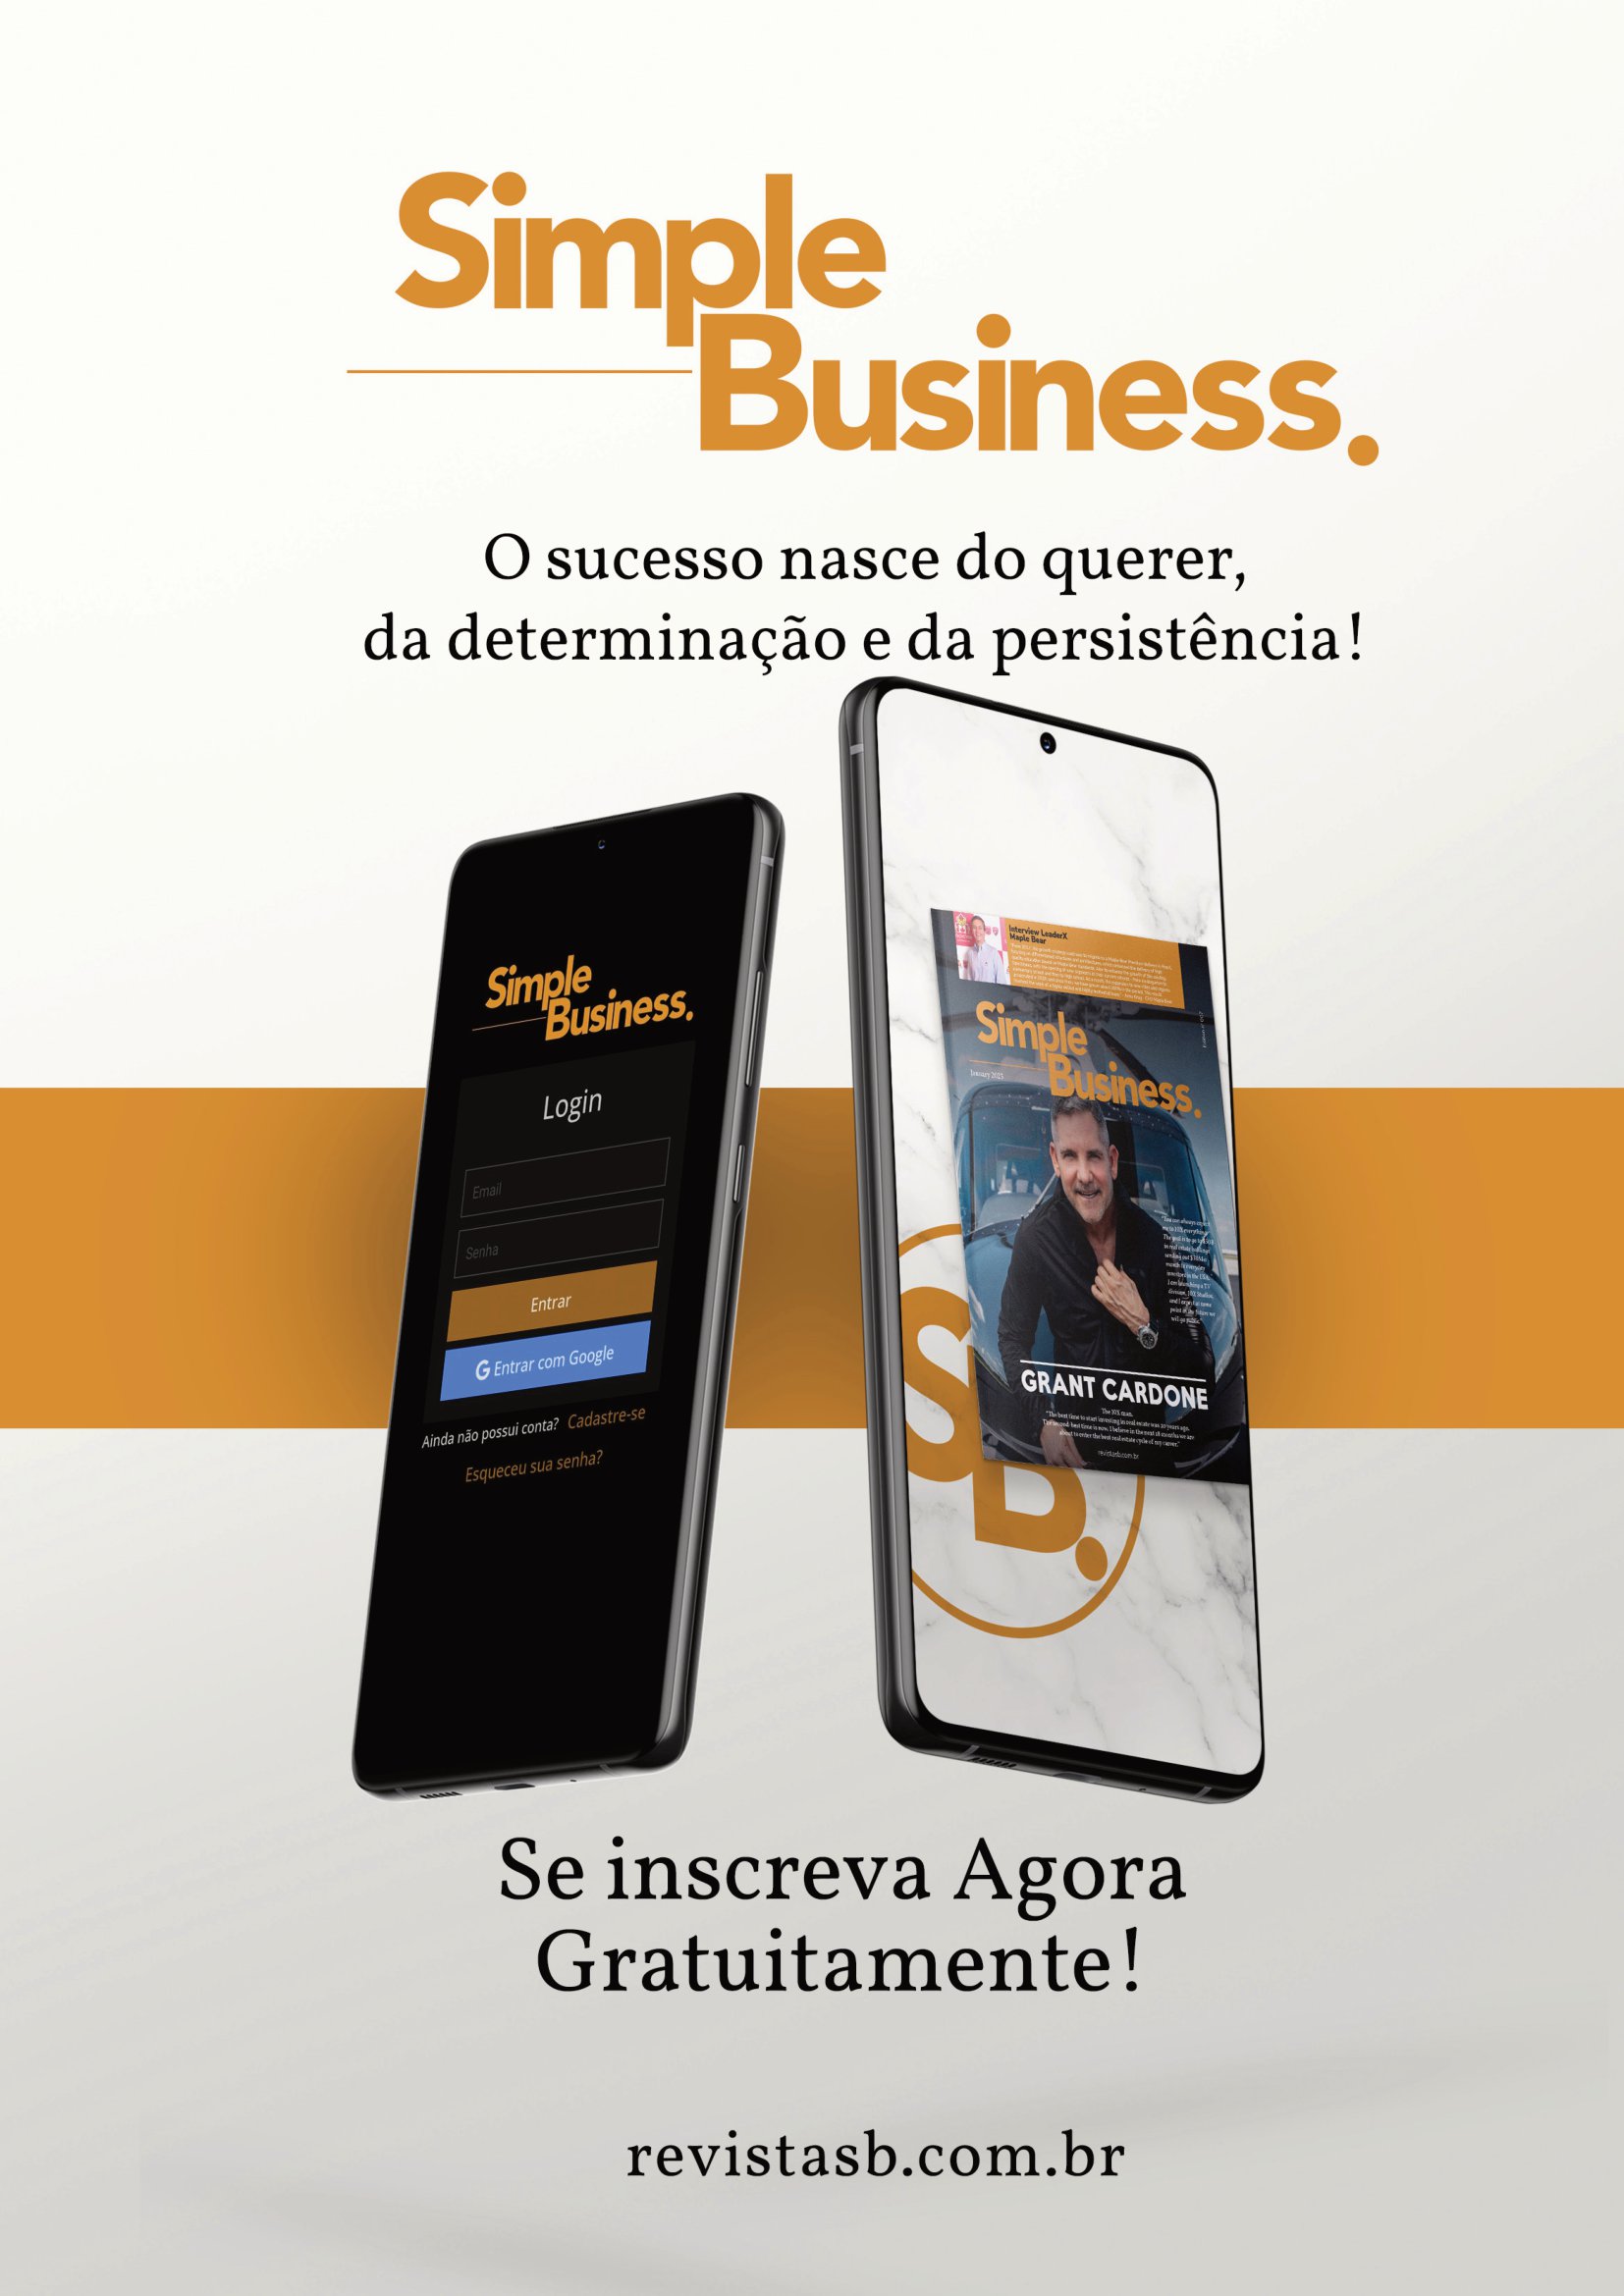 Simple business 9 pt 09